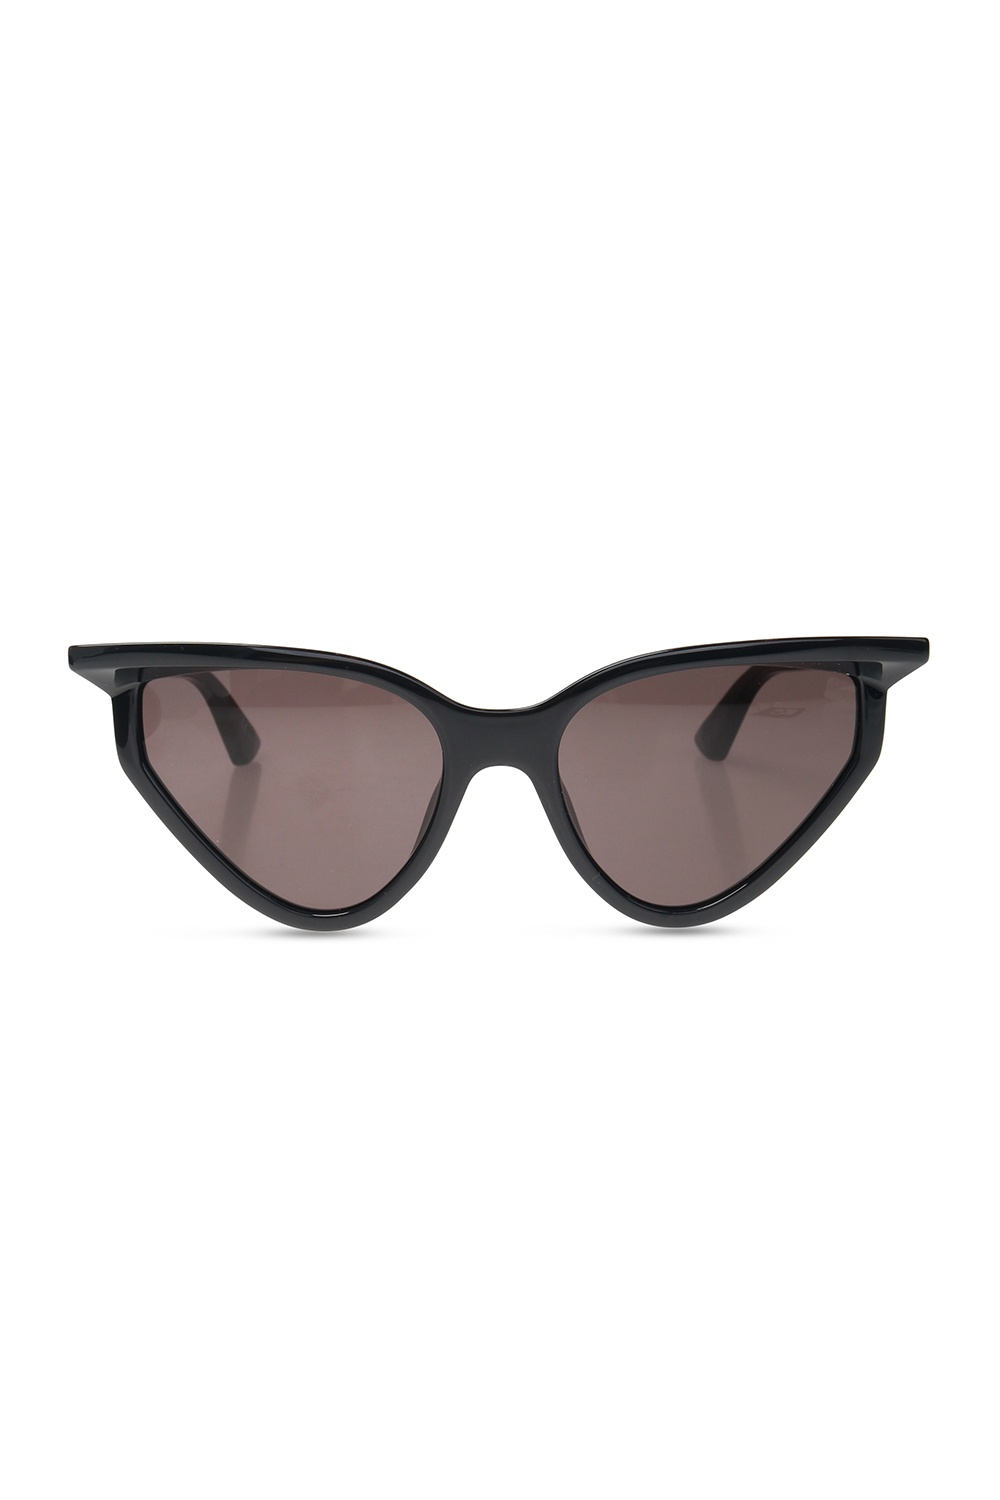 Balenciaga Bvlgari round frame sunglasses